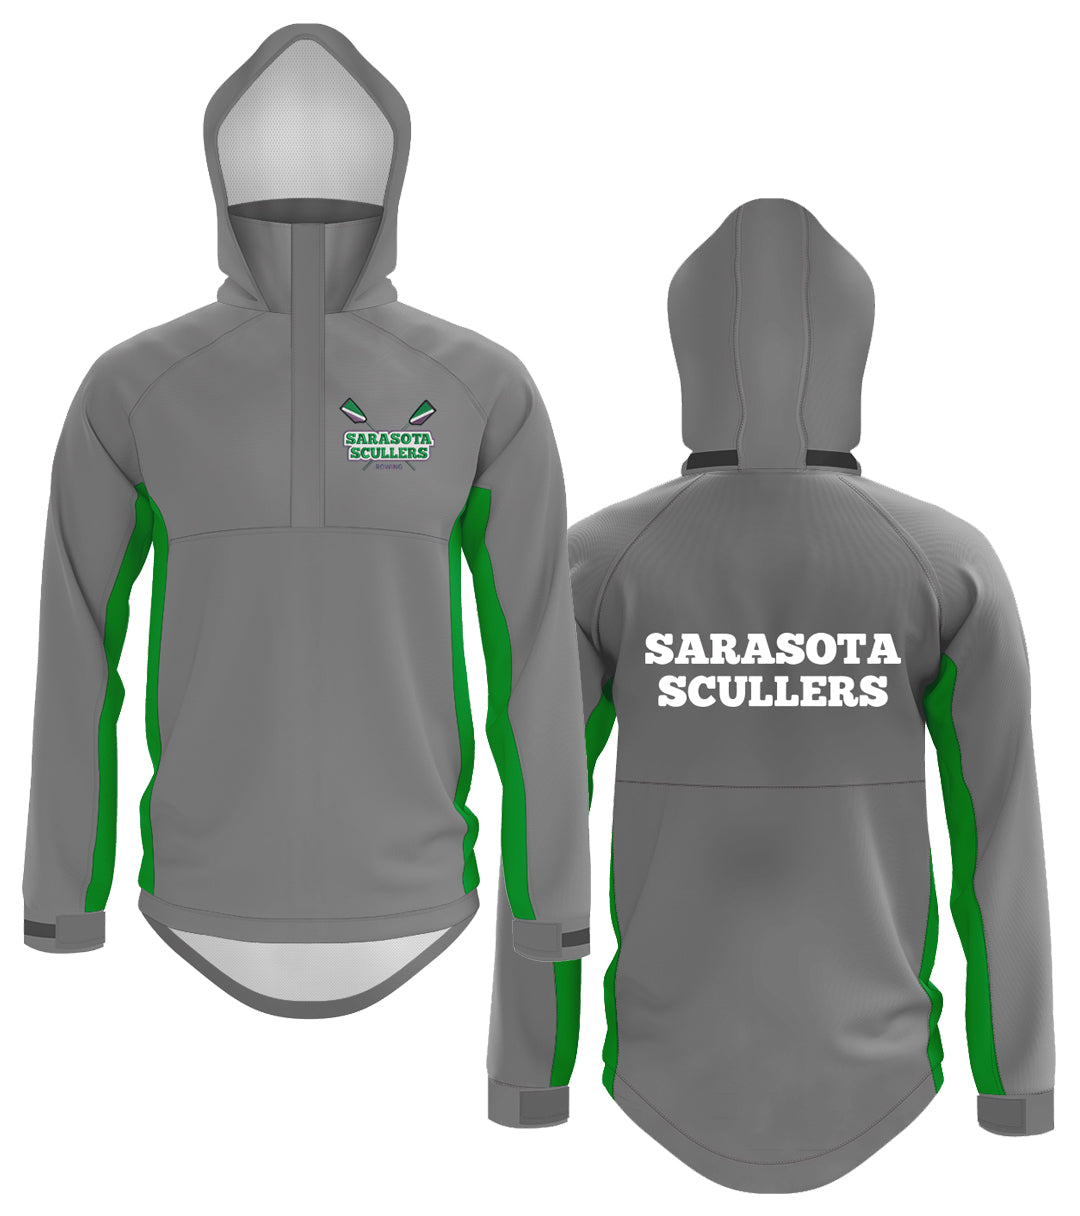 Sarasota Scullers Hydrotex Elite Performance Jacket